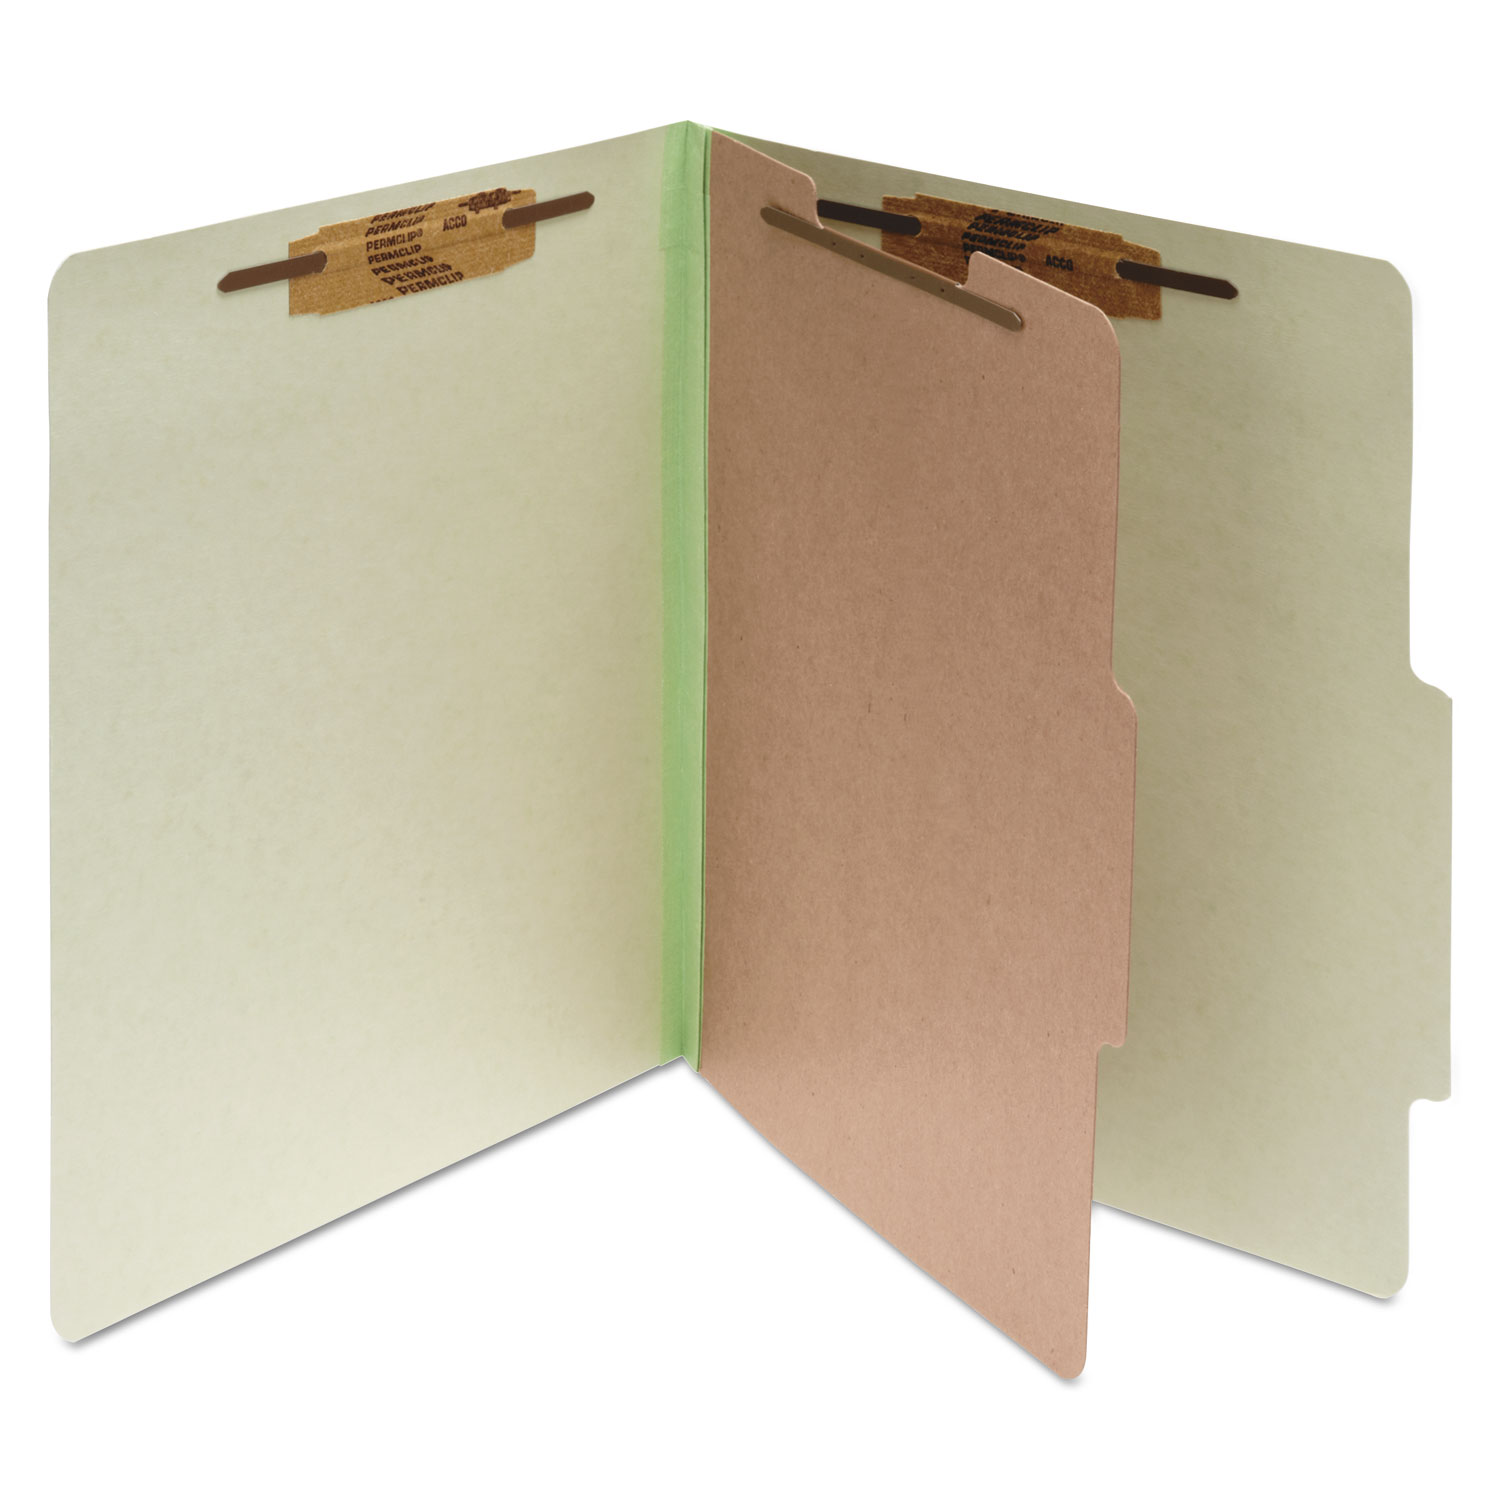  ACCO A7015044 Pressboard Classification Folders, 1 Divider, Letter Size, Leaf Green, 10/Box (ACC15044) 